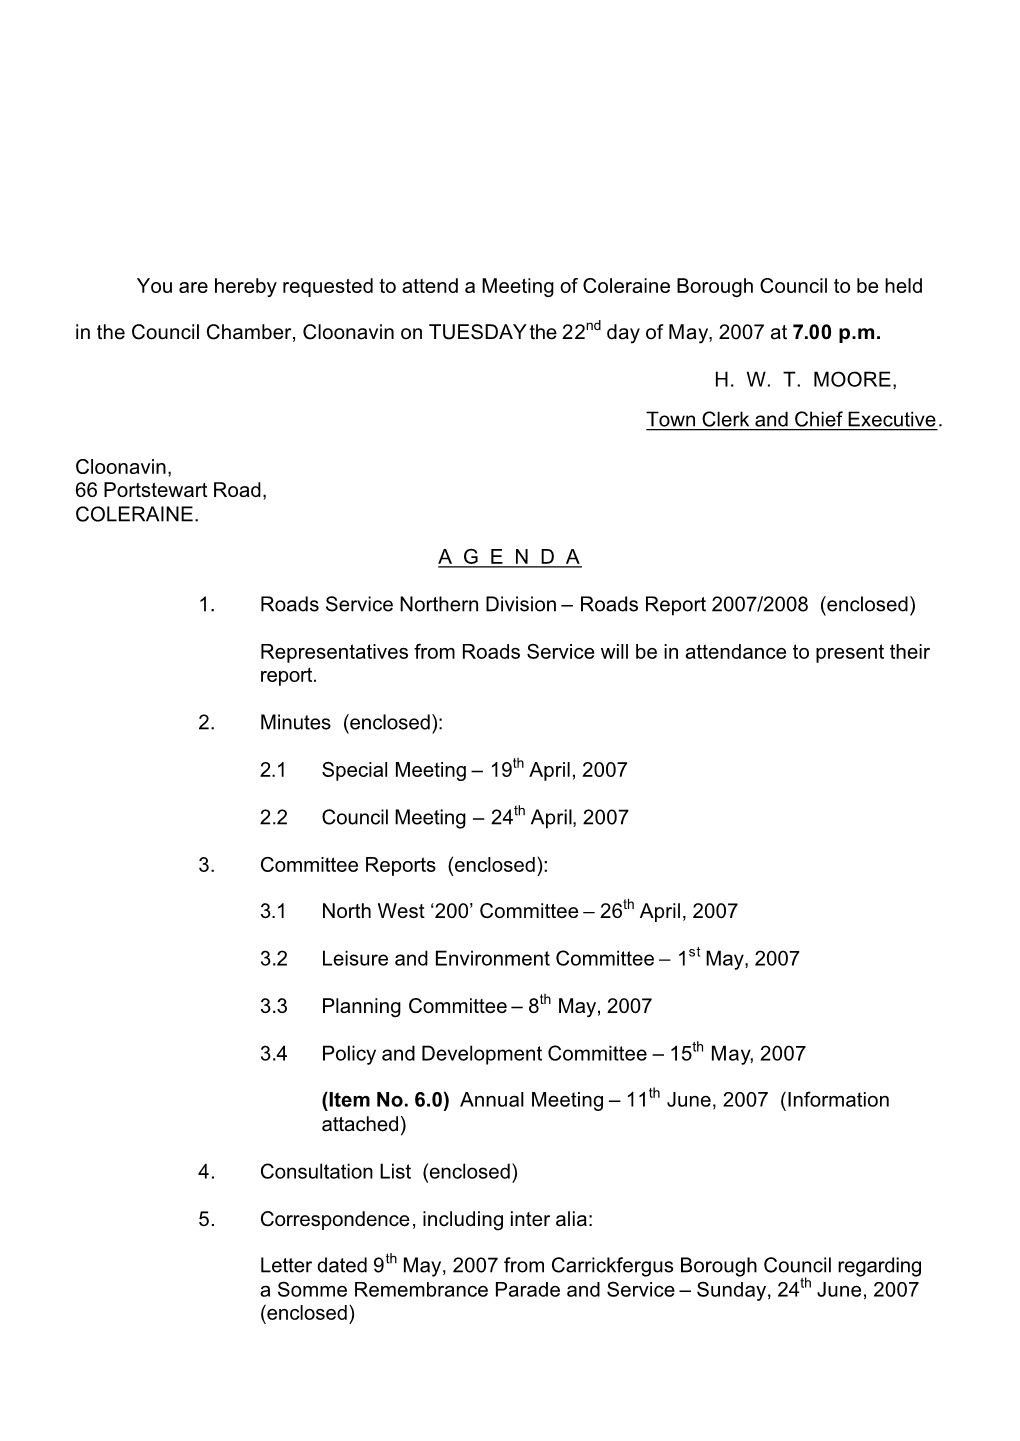 Council Meeting – 24Th April, 2007